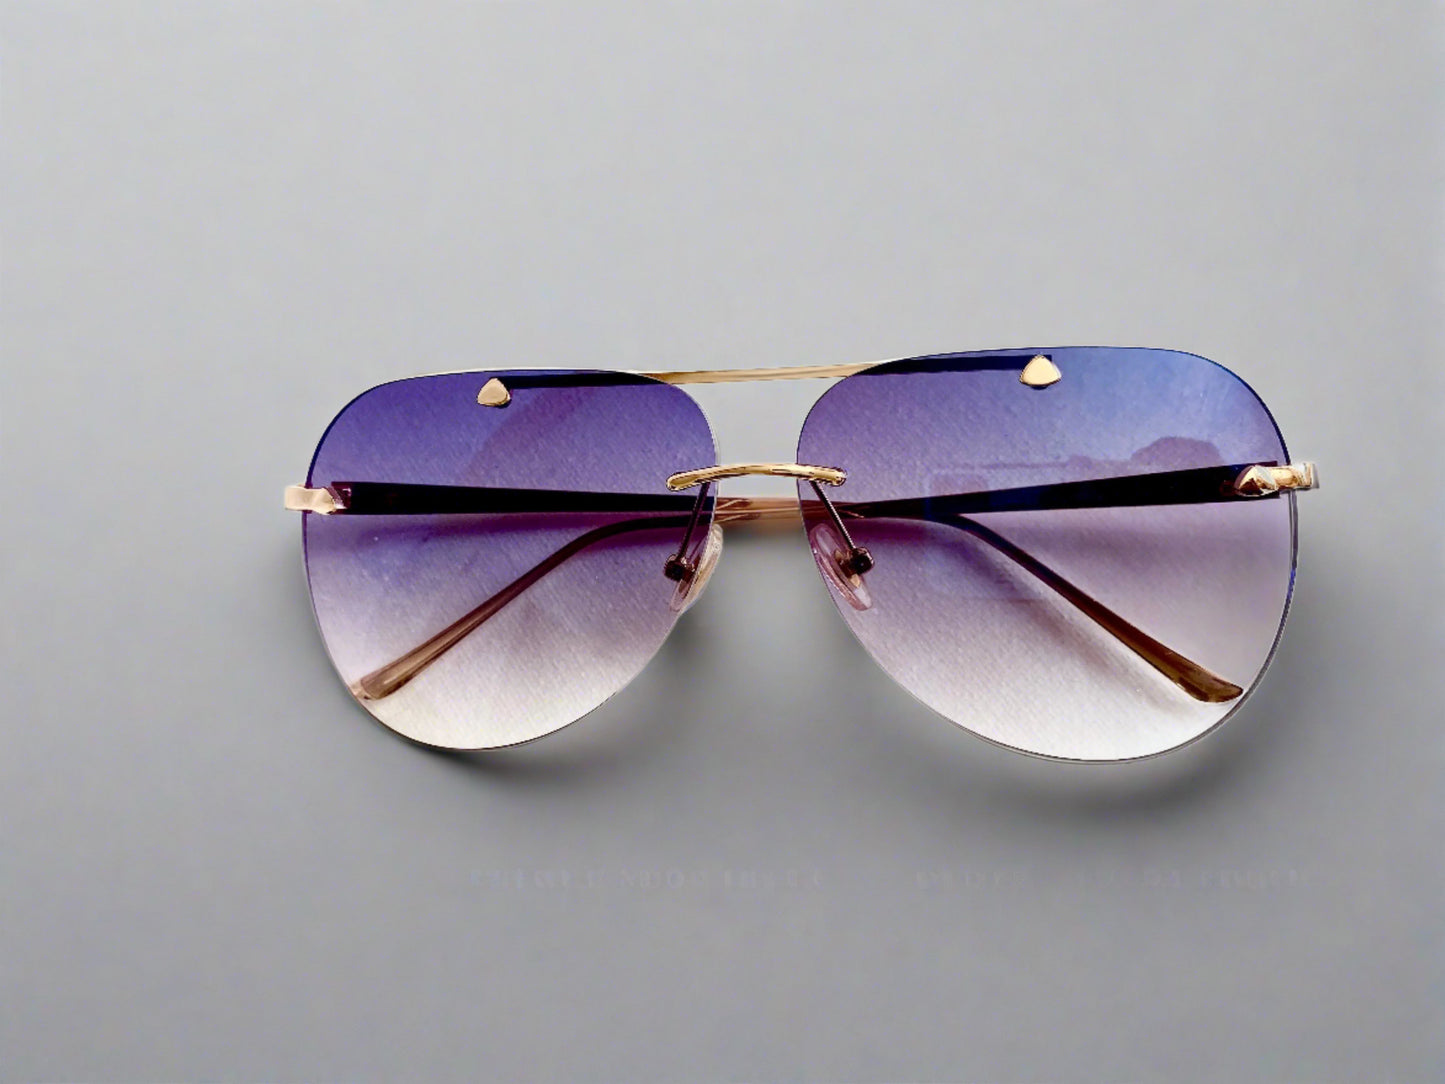 Miowne classic avaitor luxury sunglasses